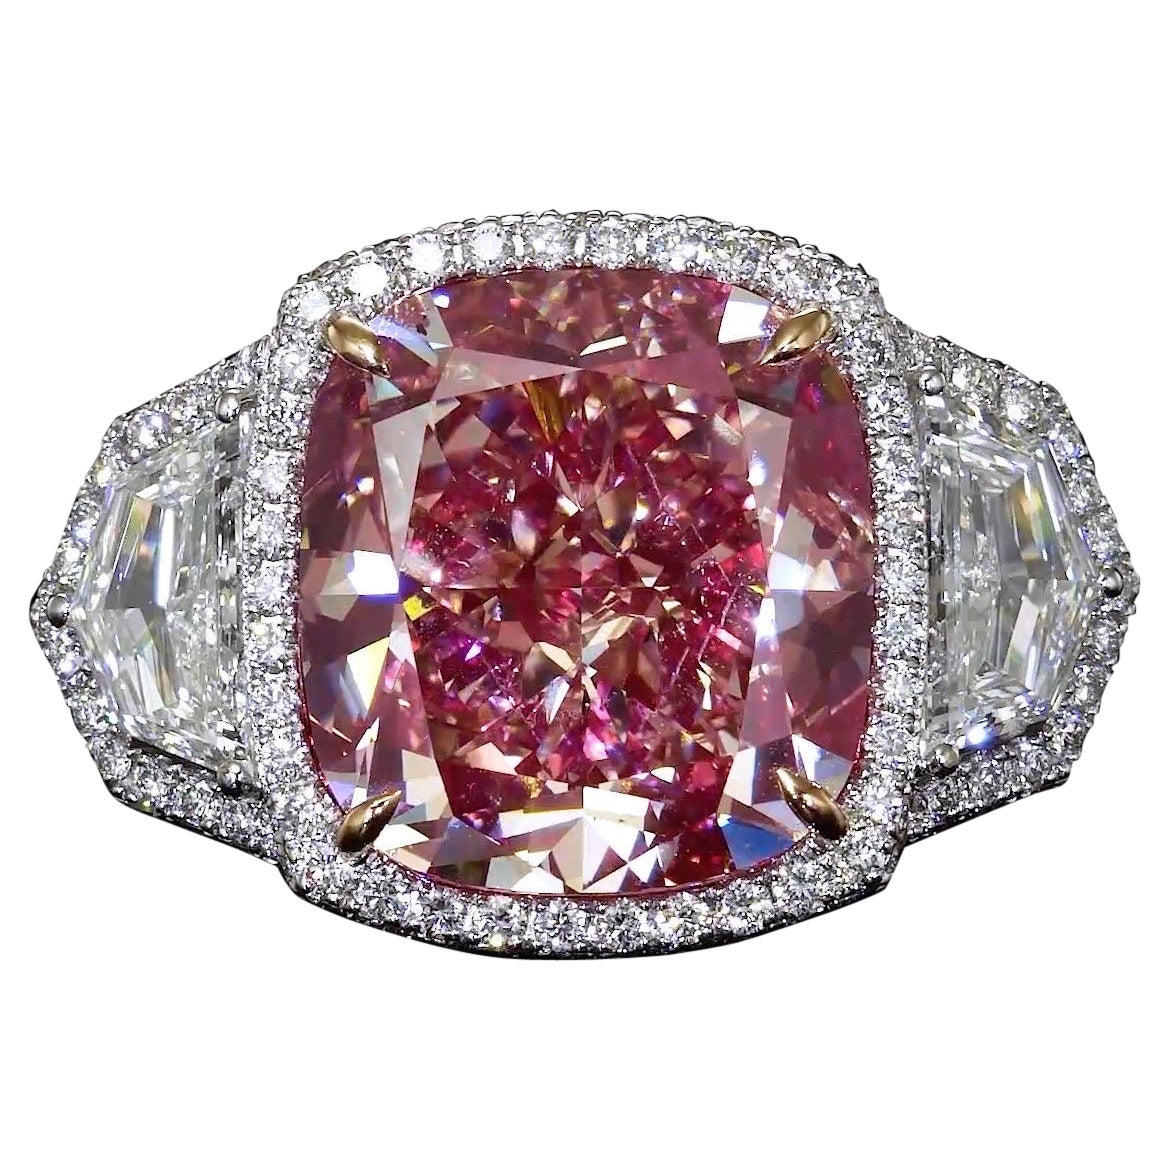 Emilio Jewelry, bague en diamants roses certifiés GIA de 16,00 carats